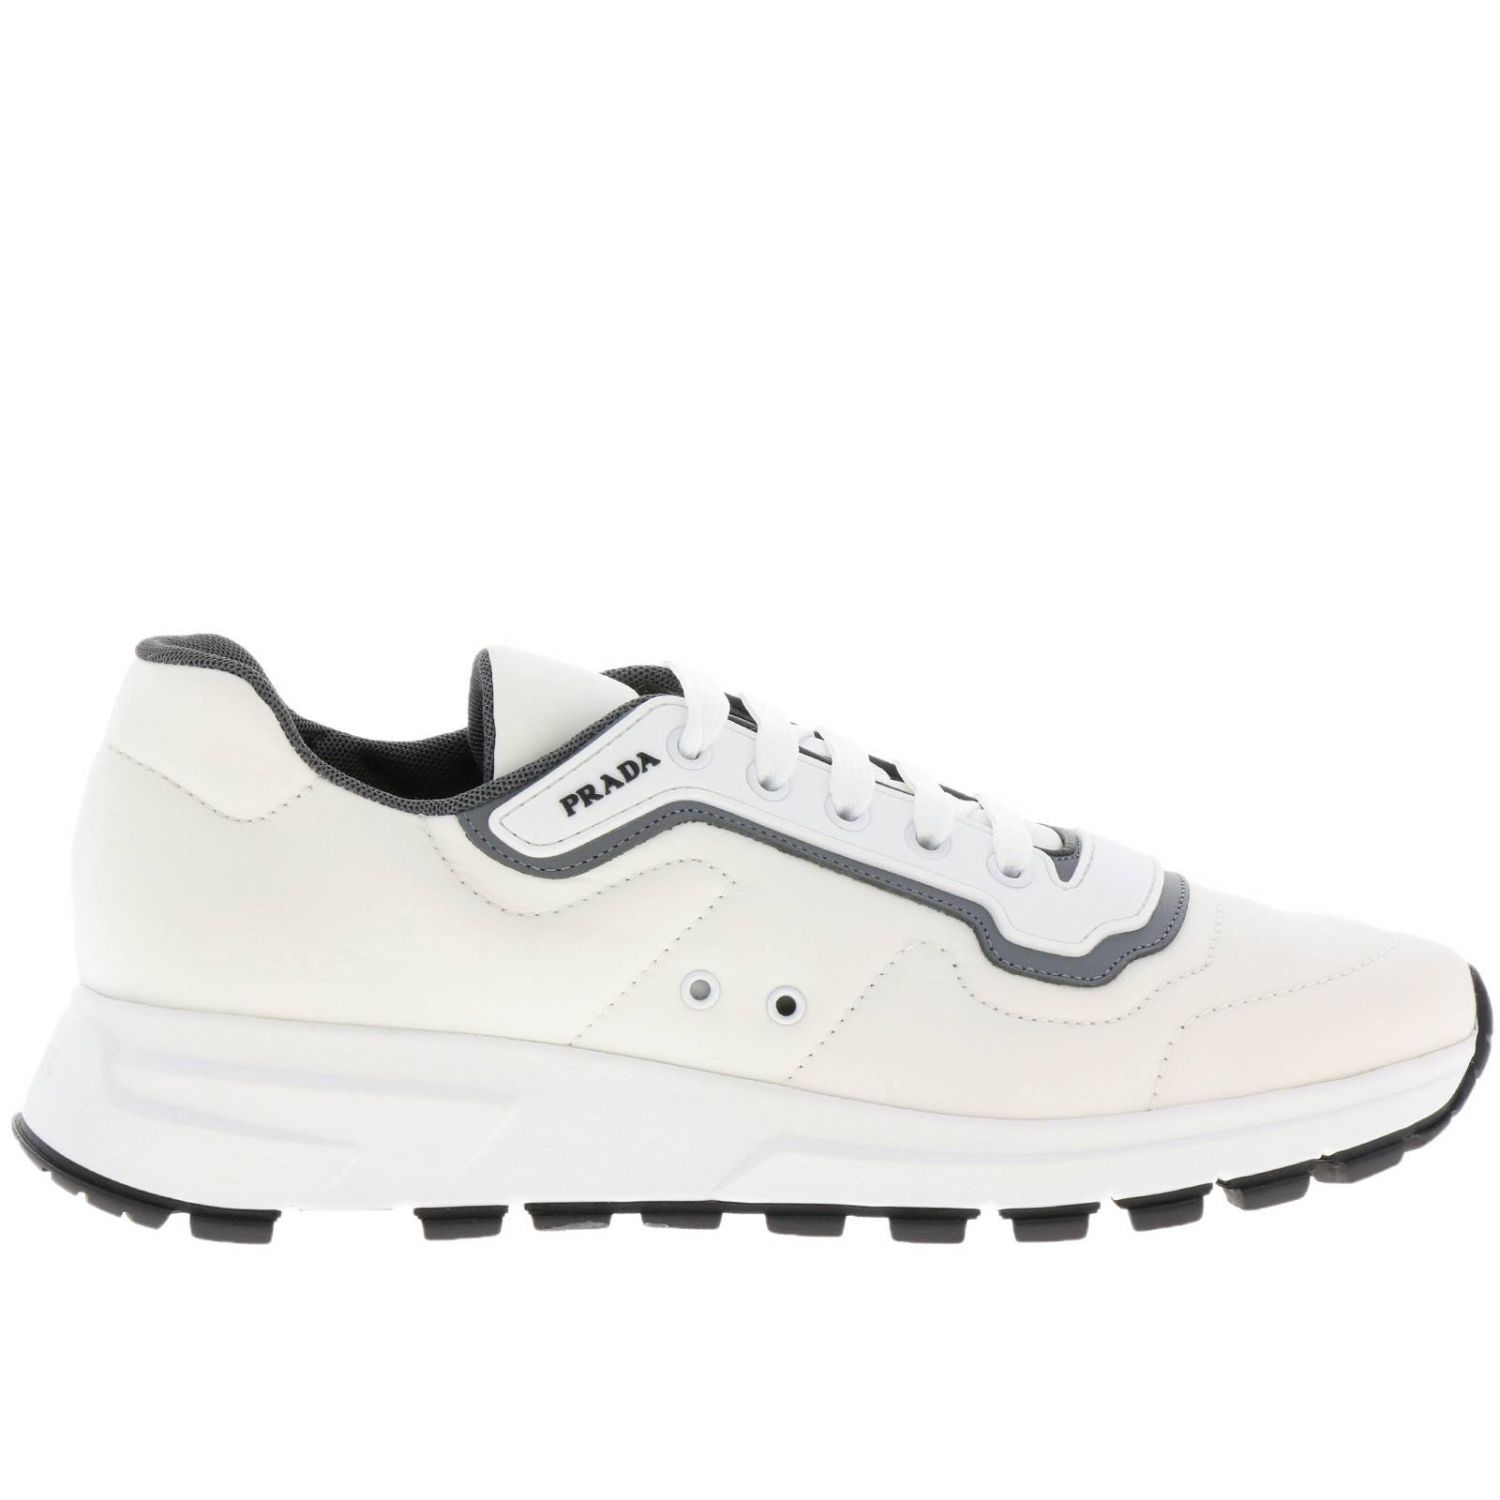 PRADA: sneakers for man - White | Prada sneakers 4E3382 1MNS online at ...